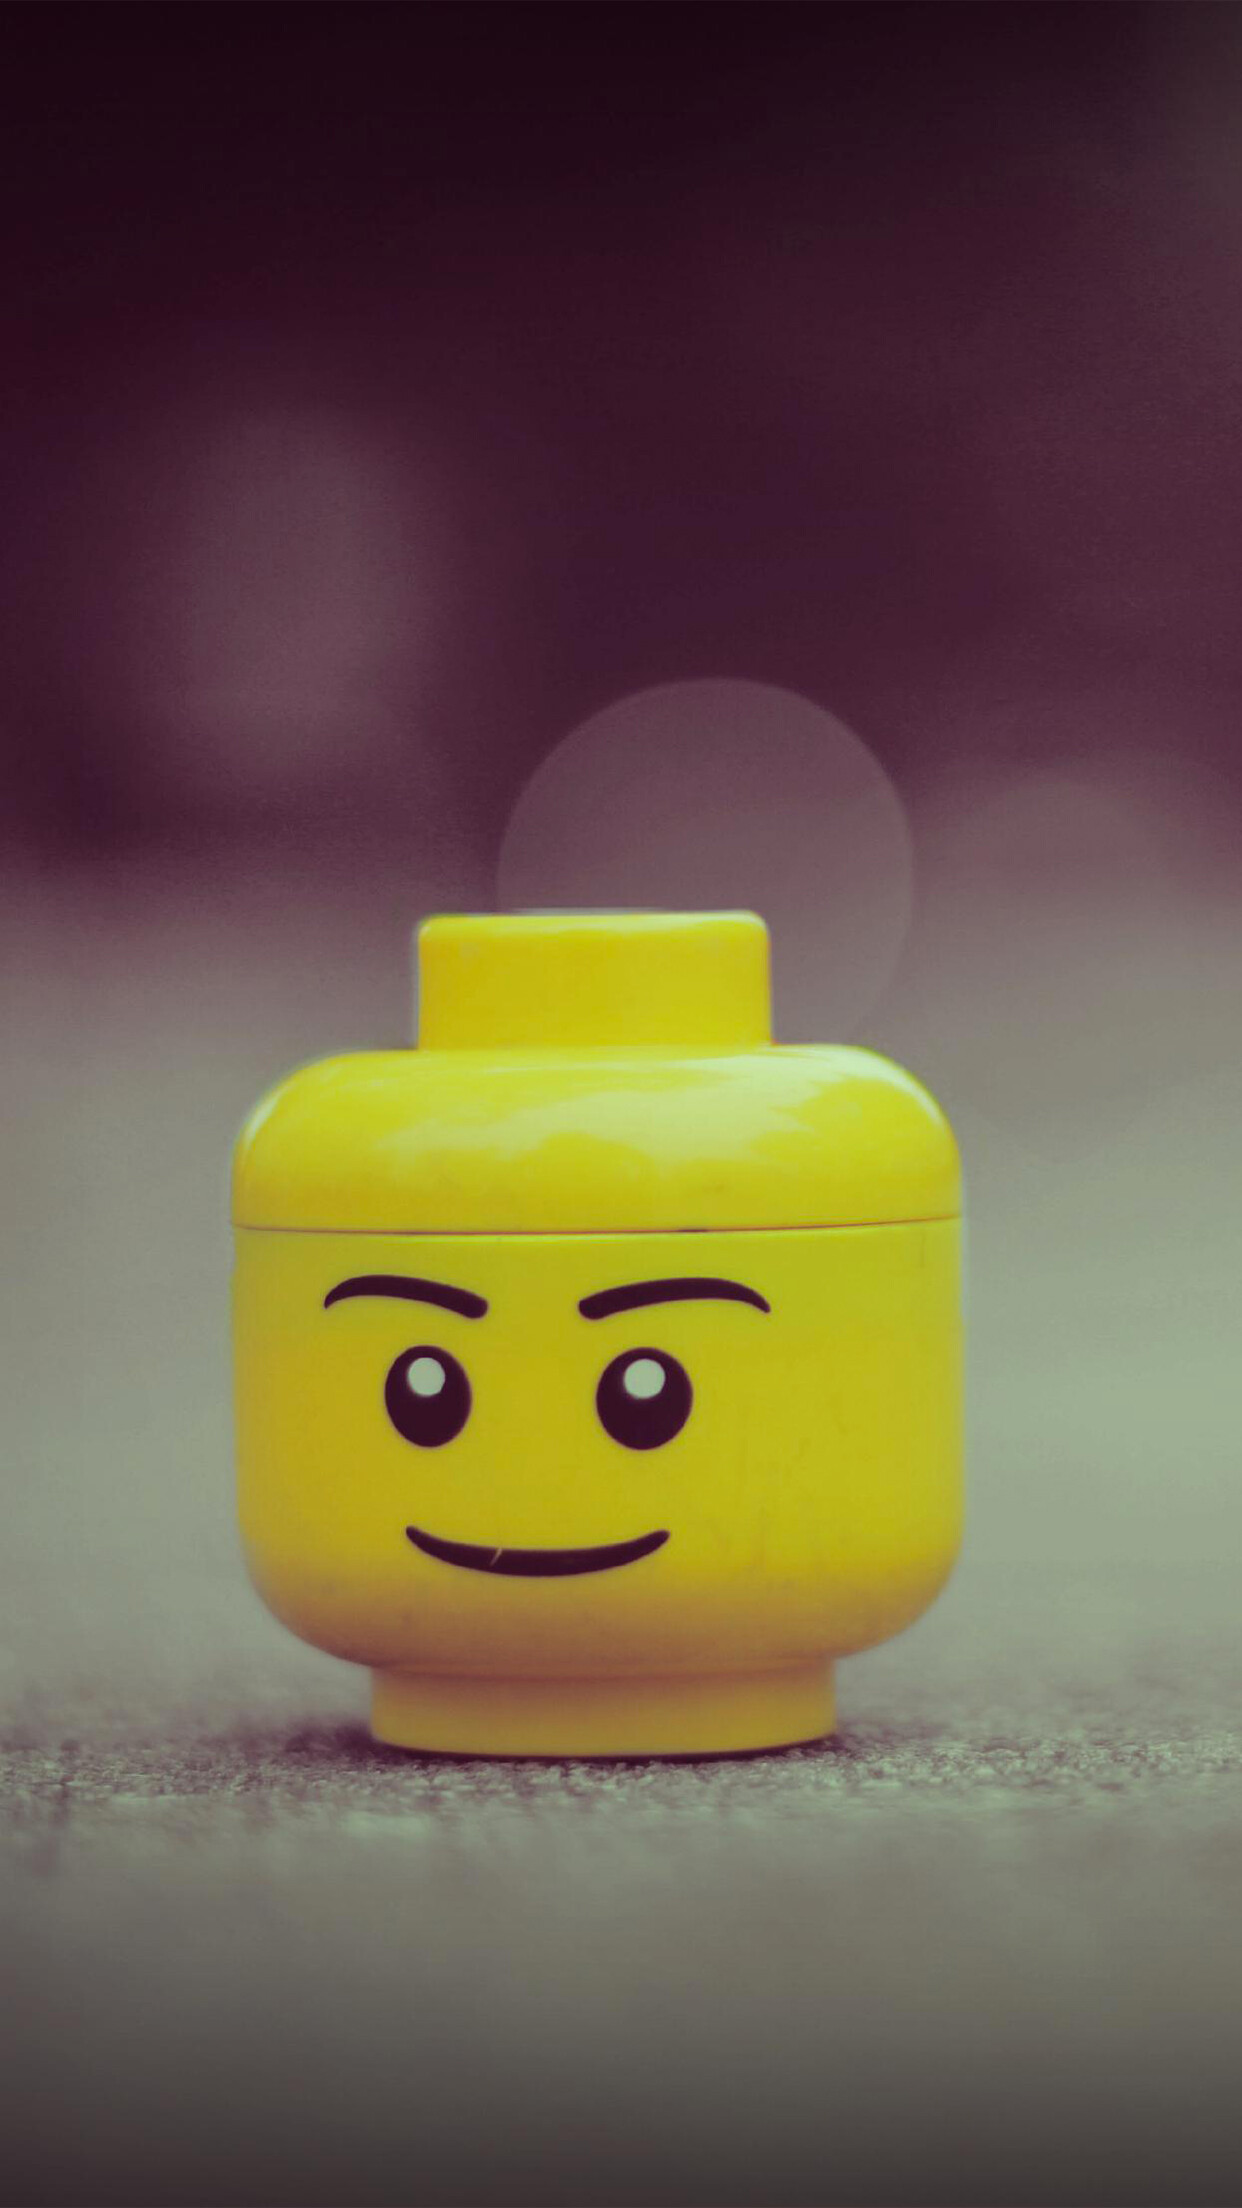 Lego: A line of plastic construction toys, Construction set. 1250x2210 HD Background.